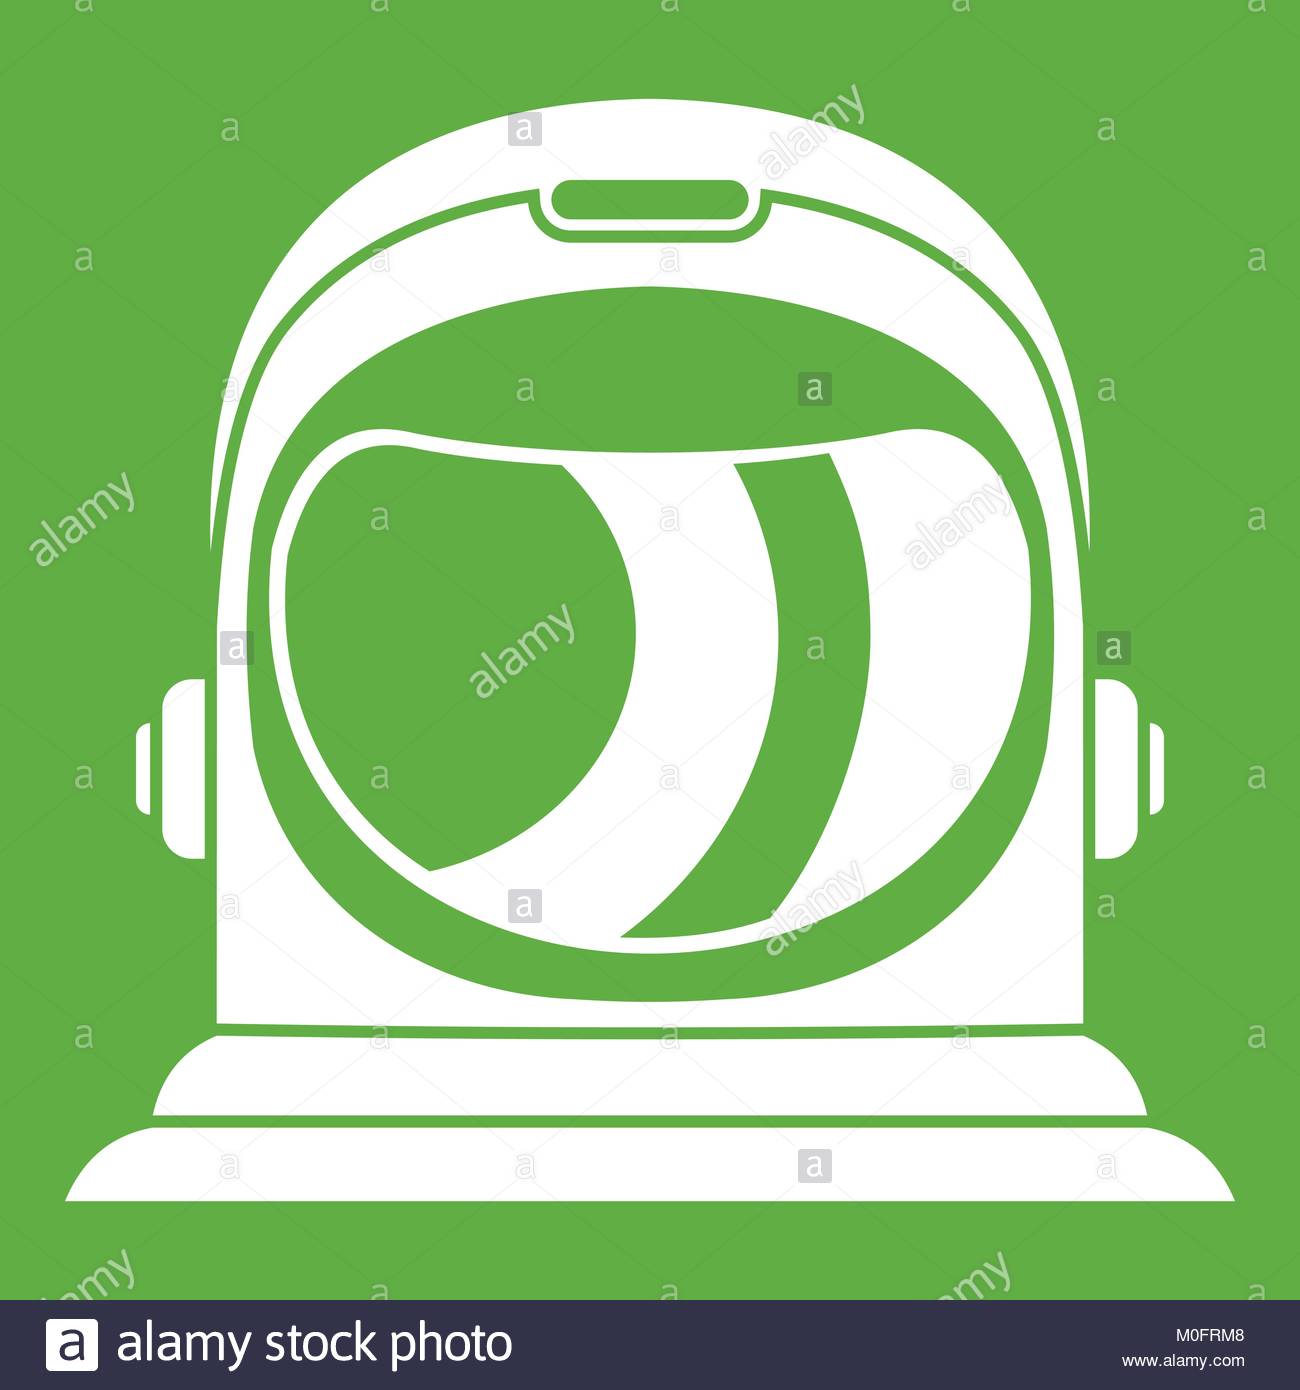 Space-helmet icons | Noun Project